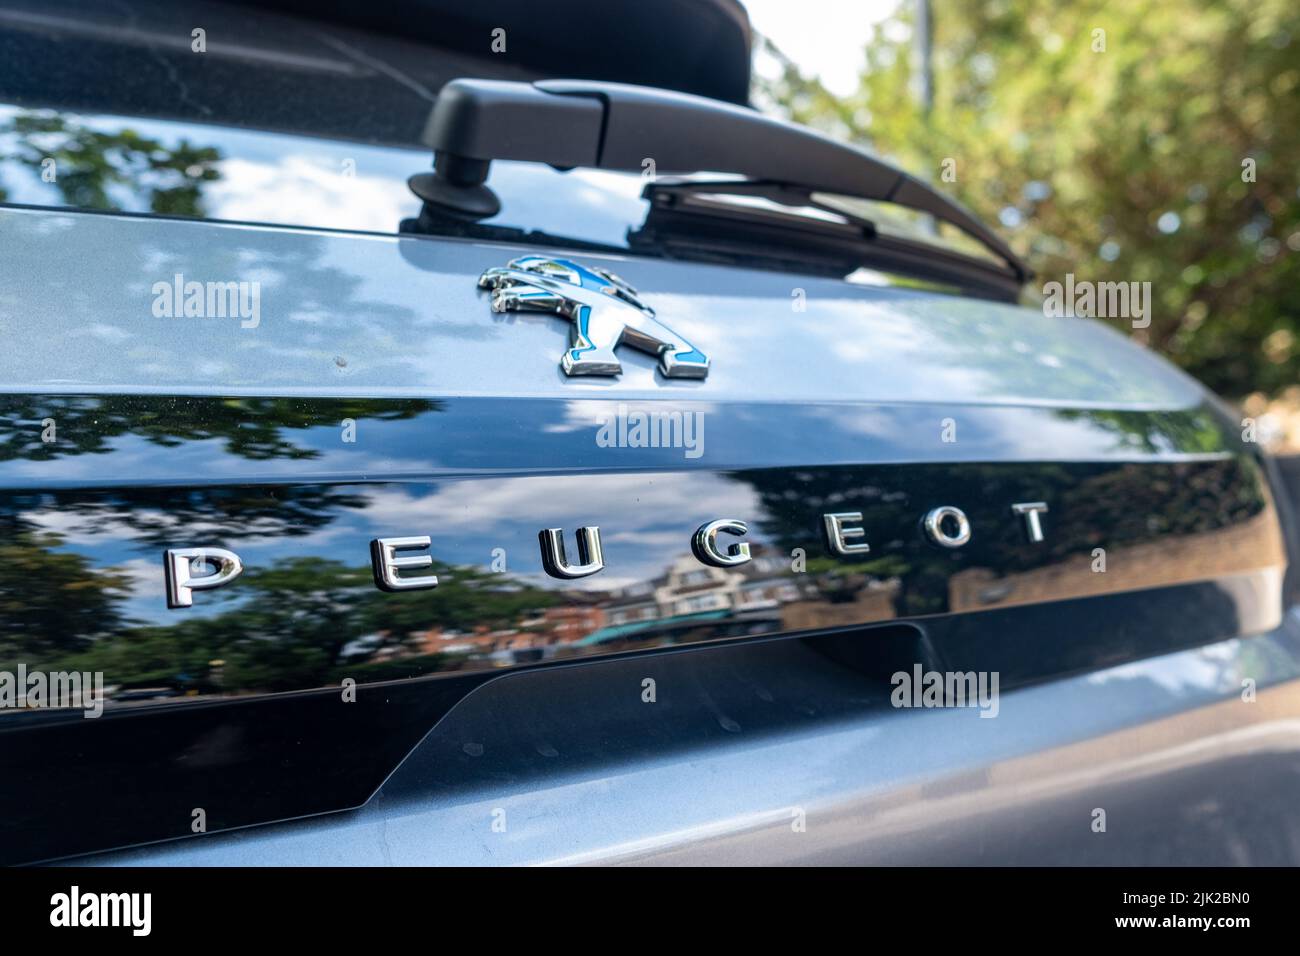 Londres- Julio 2022: Peugeot e 208 modelo eléctrico e híbrido del fabricante francés de automóviles. Foto de stock